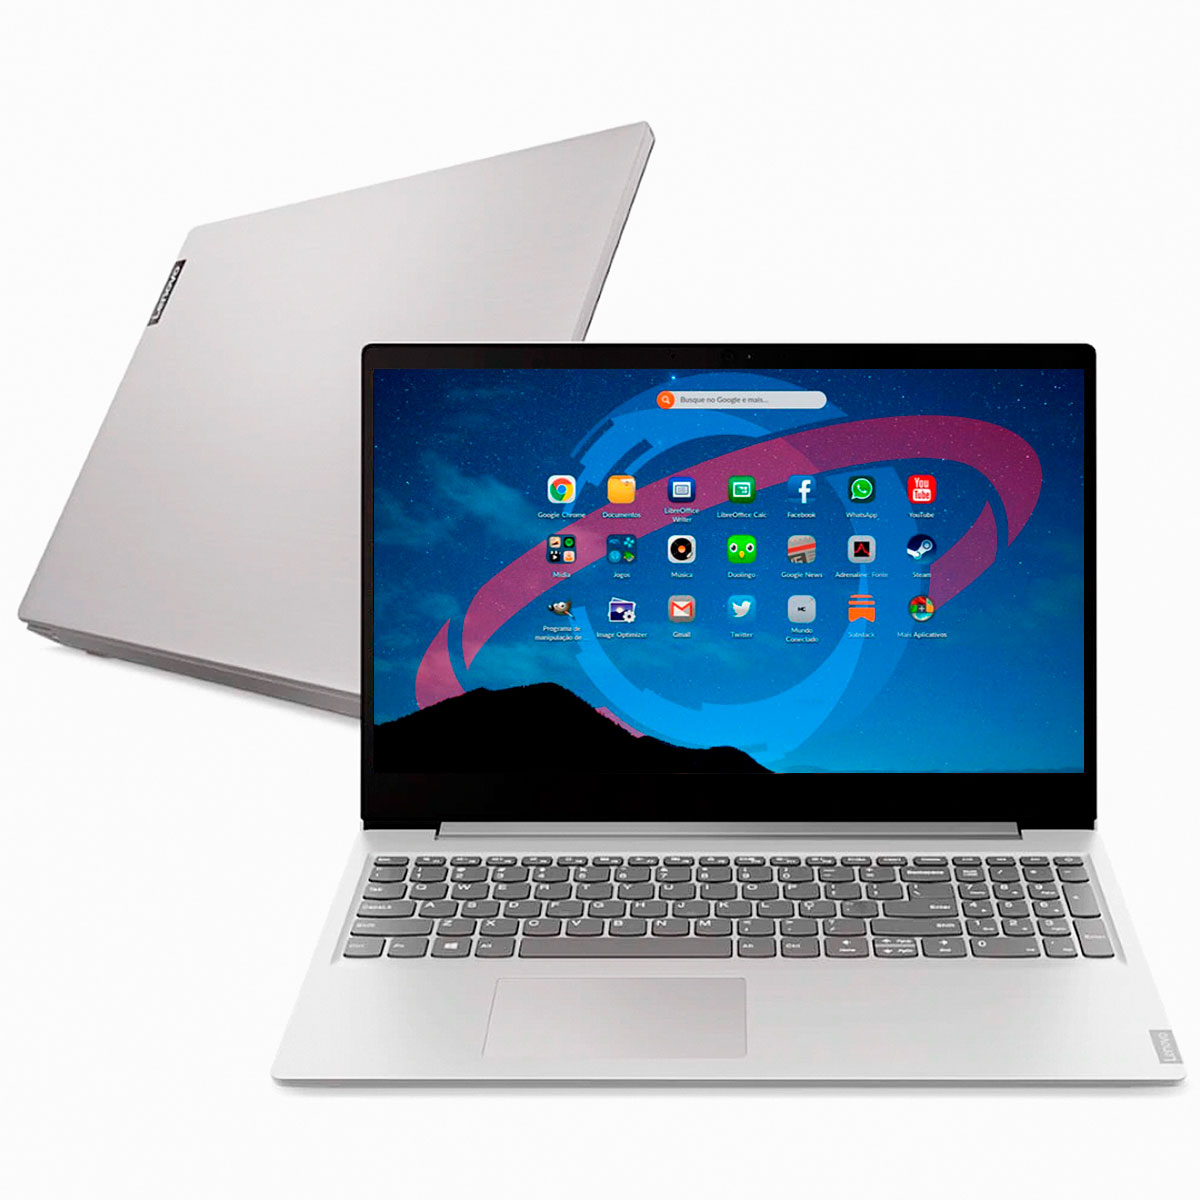 Notebook Lenovo Ideapad S145 - Intel i3 8130U, RAM 8GB, HD 1TB, Tela 15.6